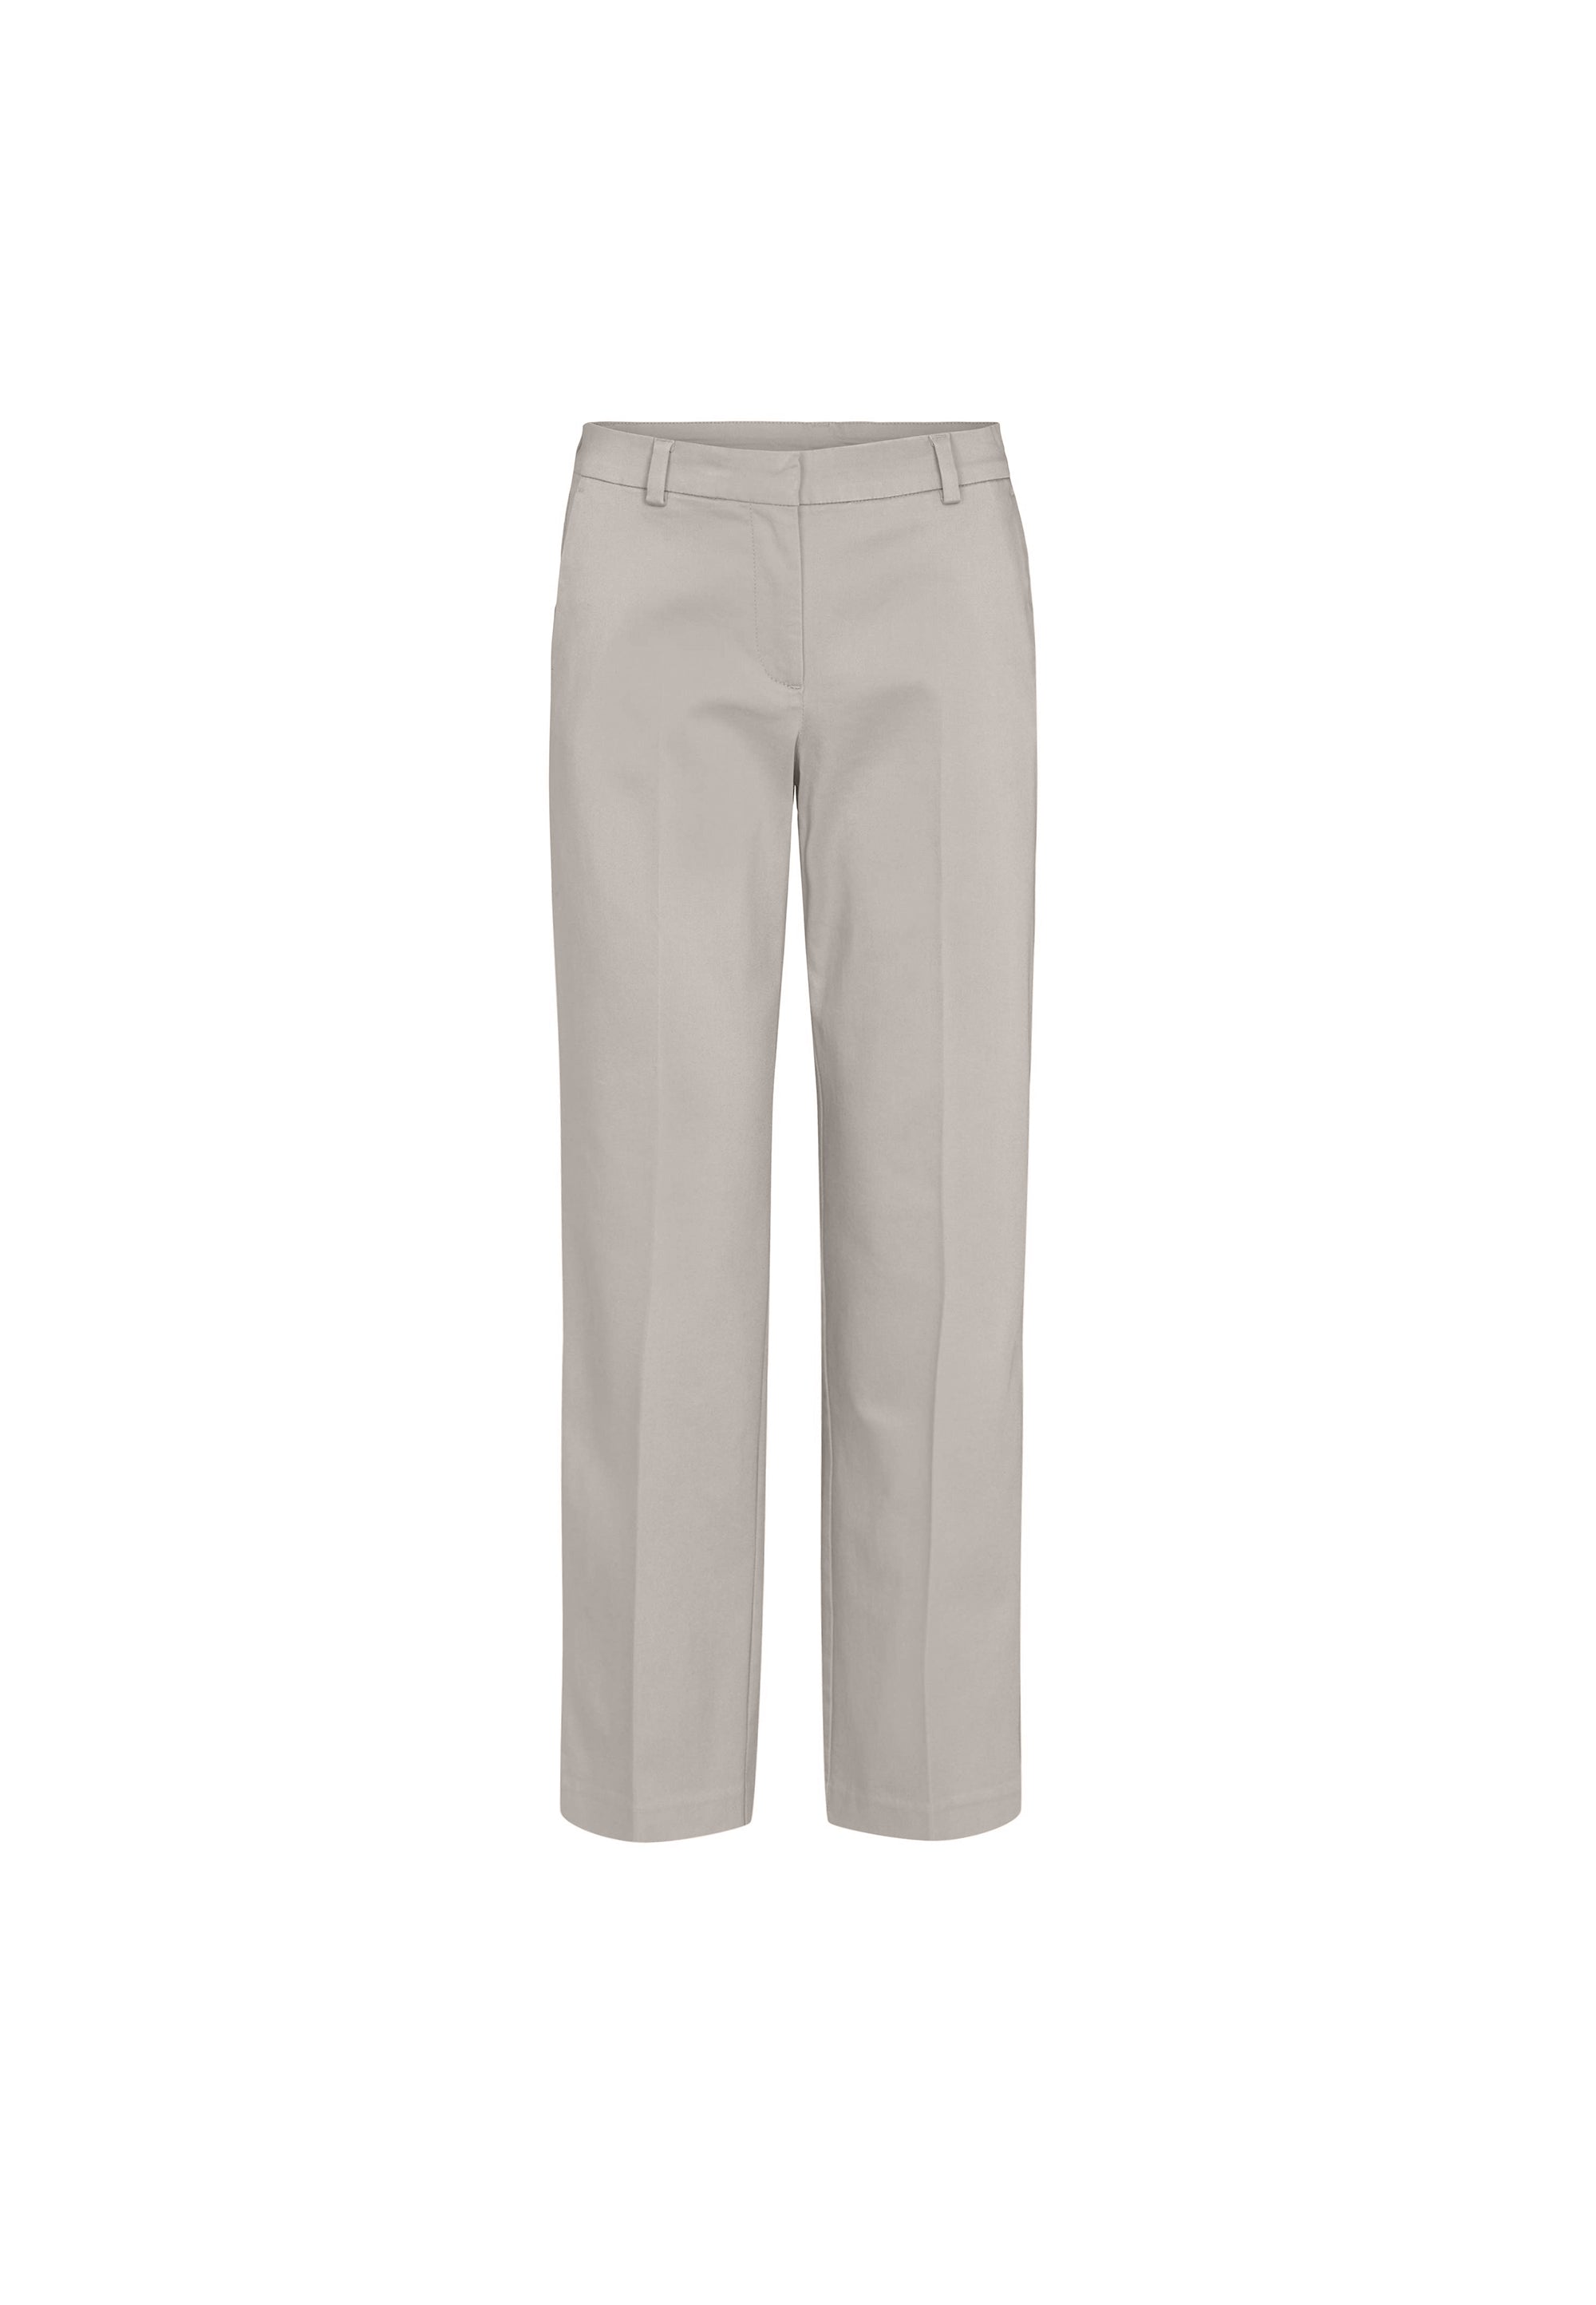 LAURIE Judy Straight - Medium Length Trousers STRAIGHT Grau sand